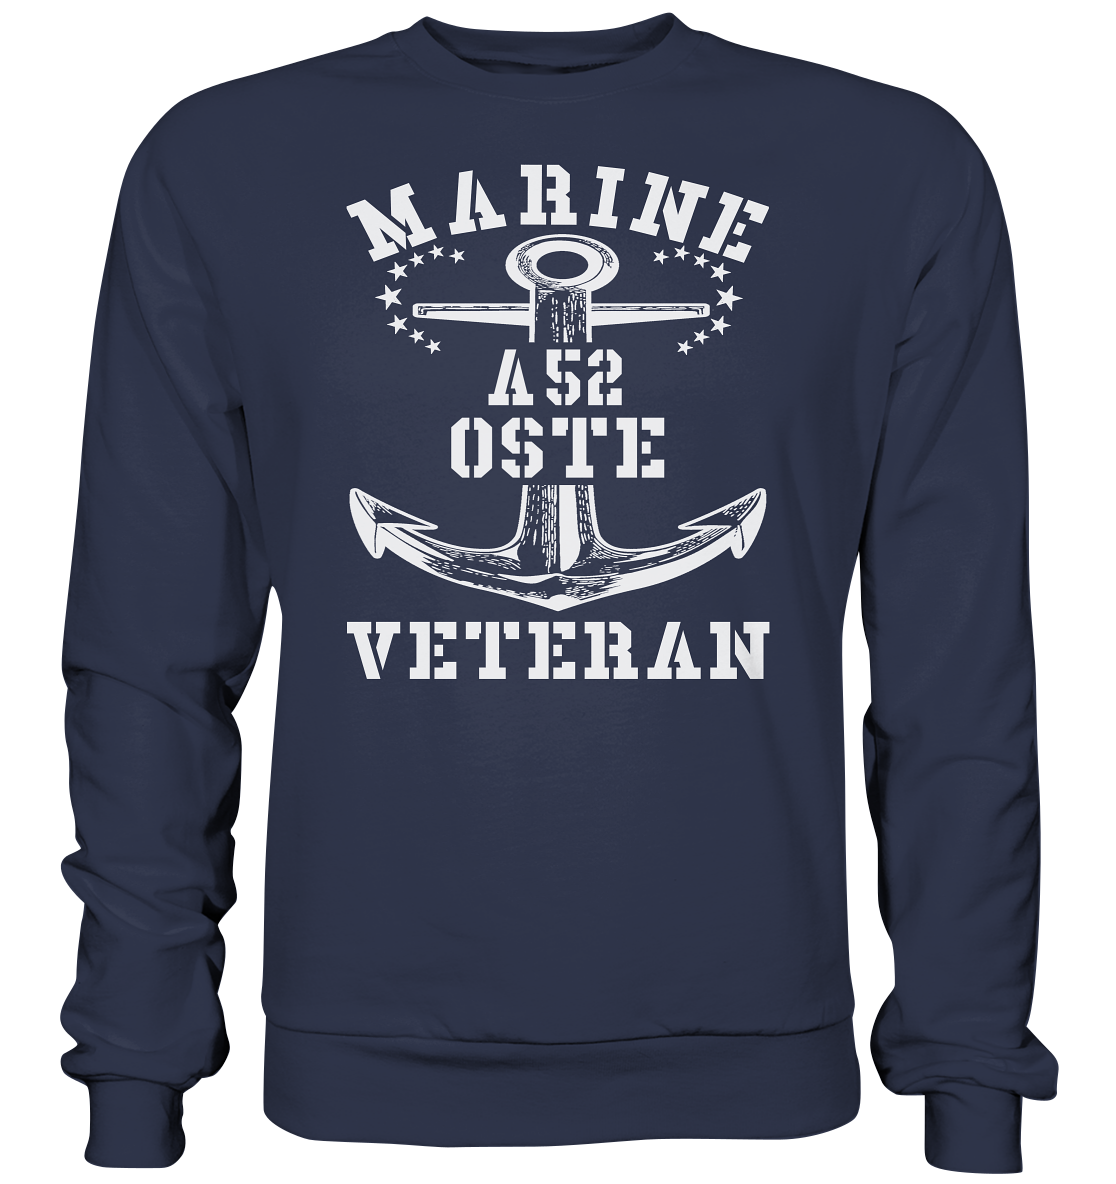 FD-Boot A52 OSTE Marine Veteran - Premium Sweatshirt